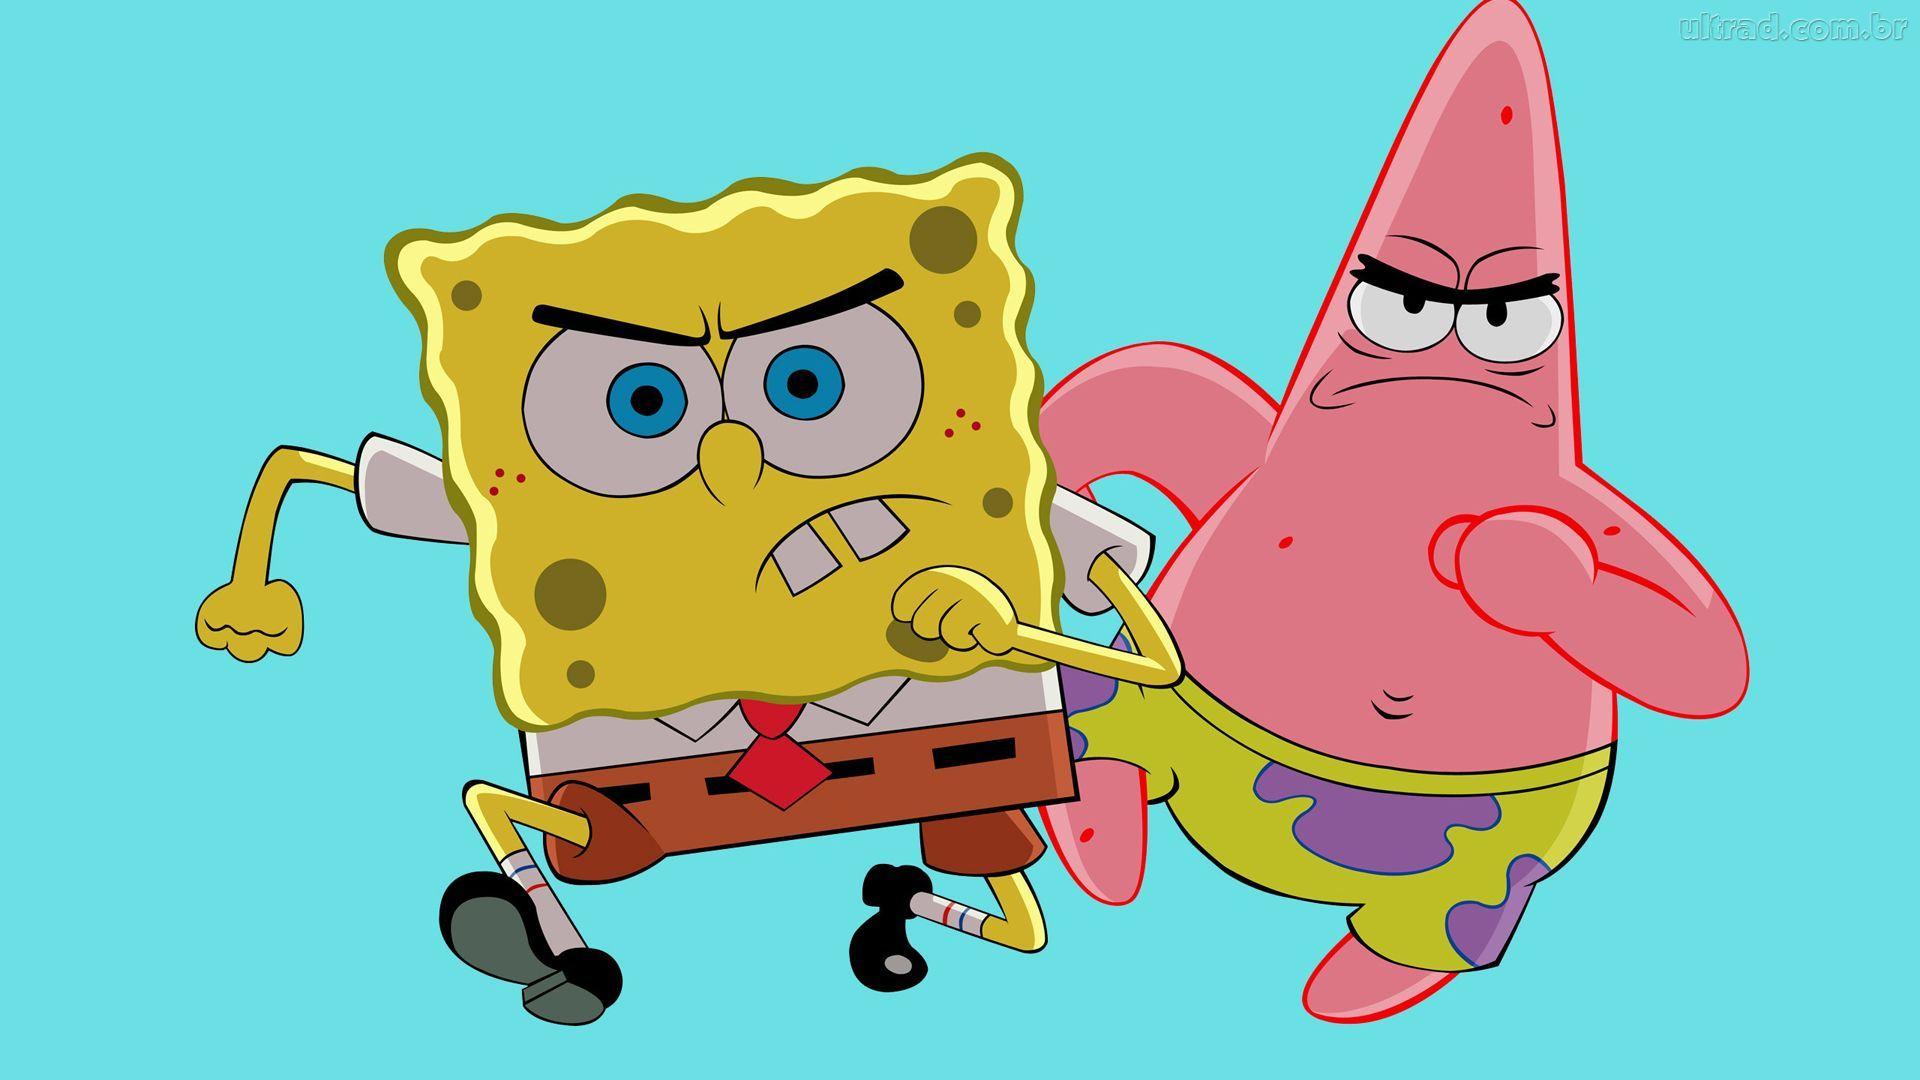 Funny Spongebob And Patrick Background 1 HD Wallpaper. Spongebob